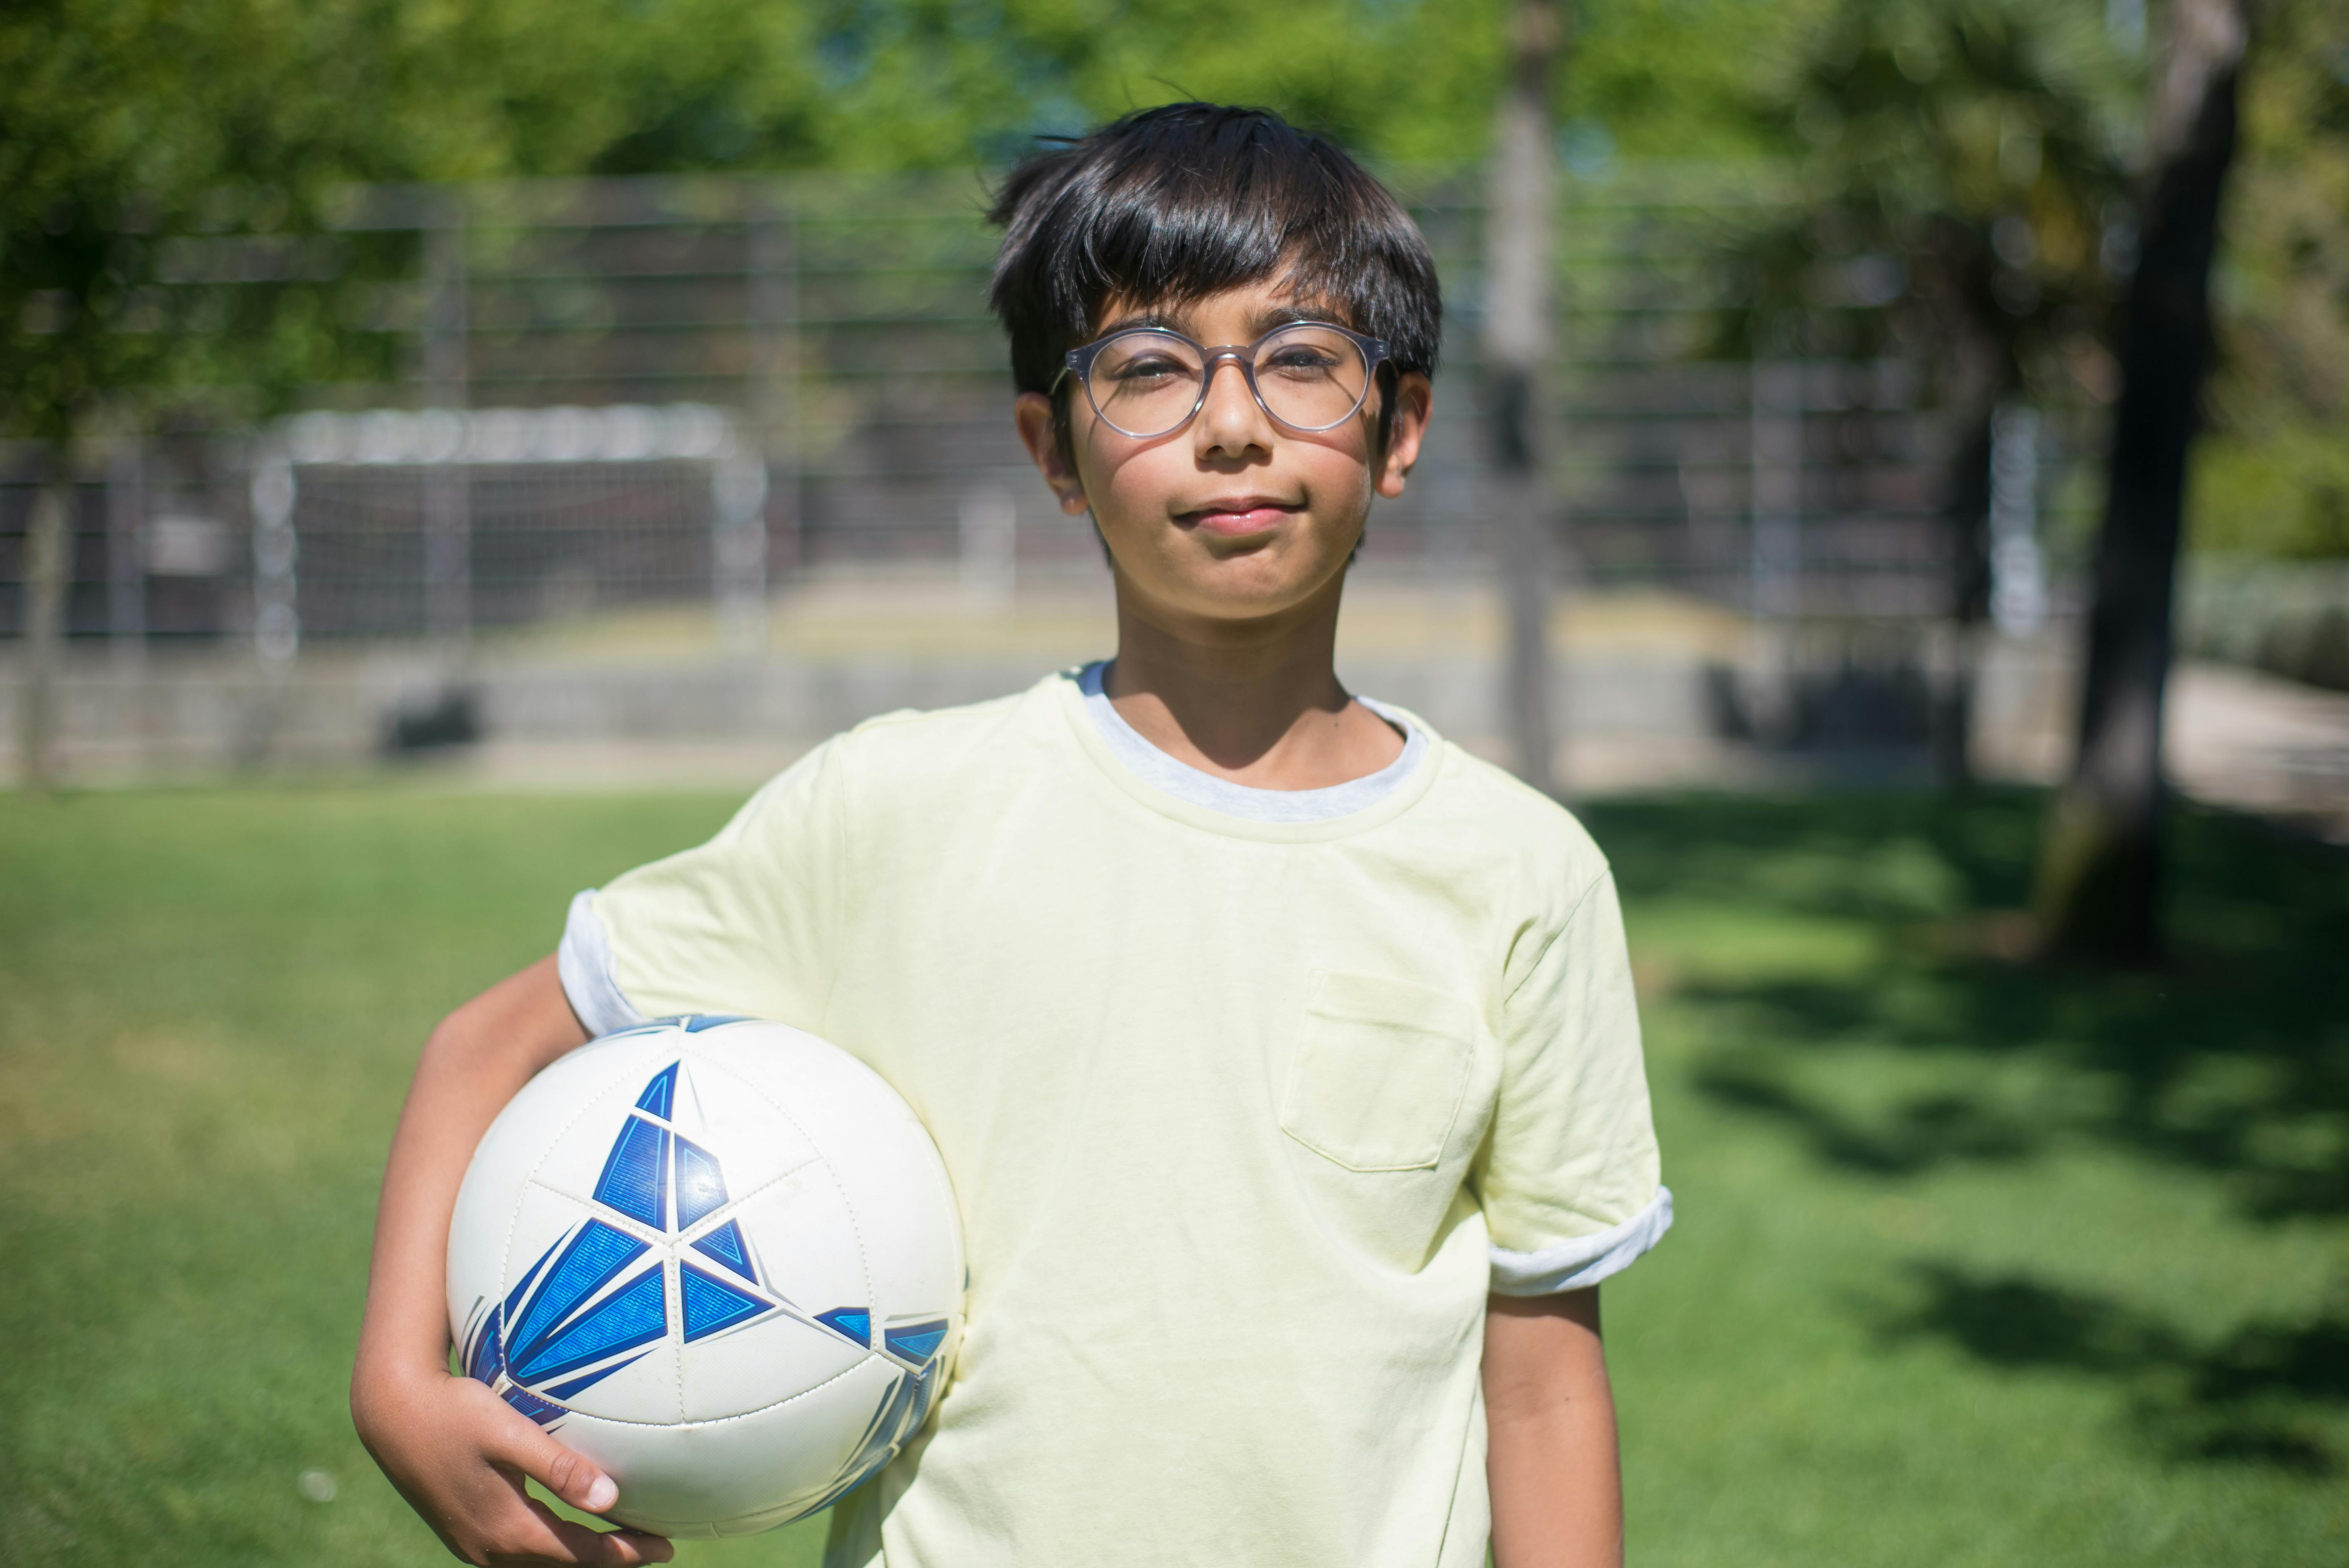 boy wearing eyeglasses carrying football